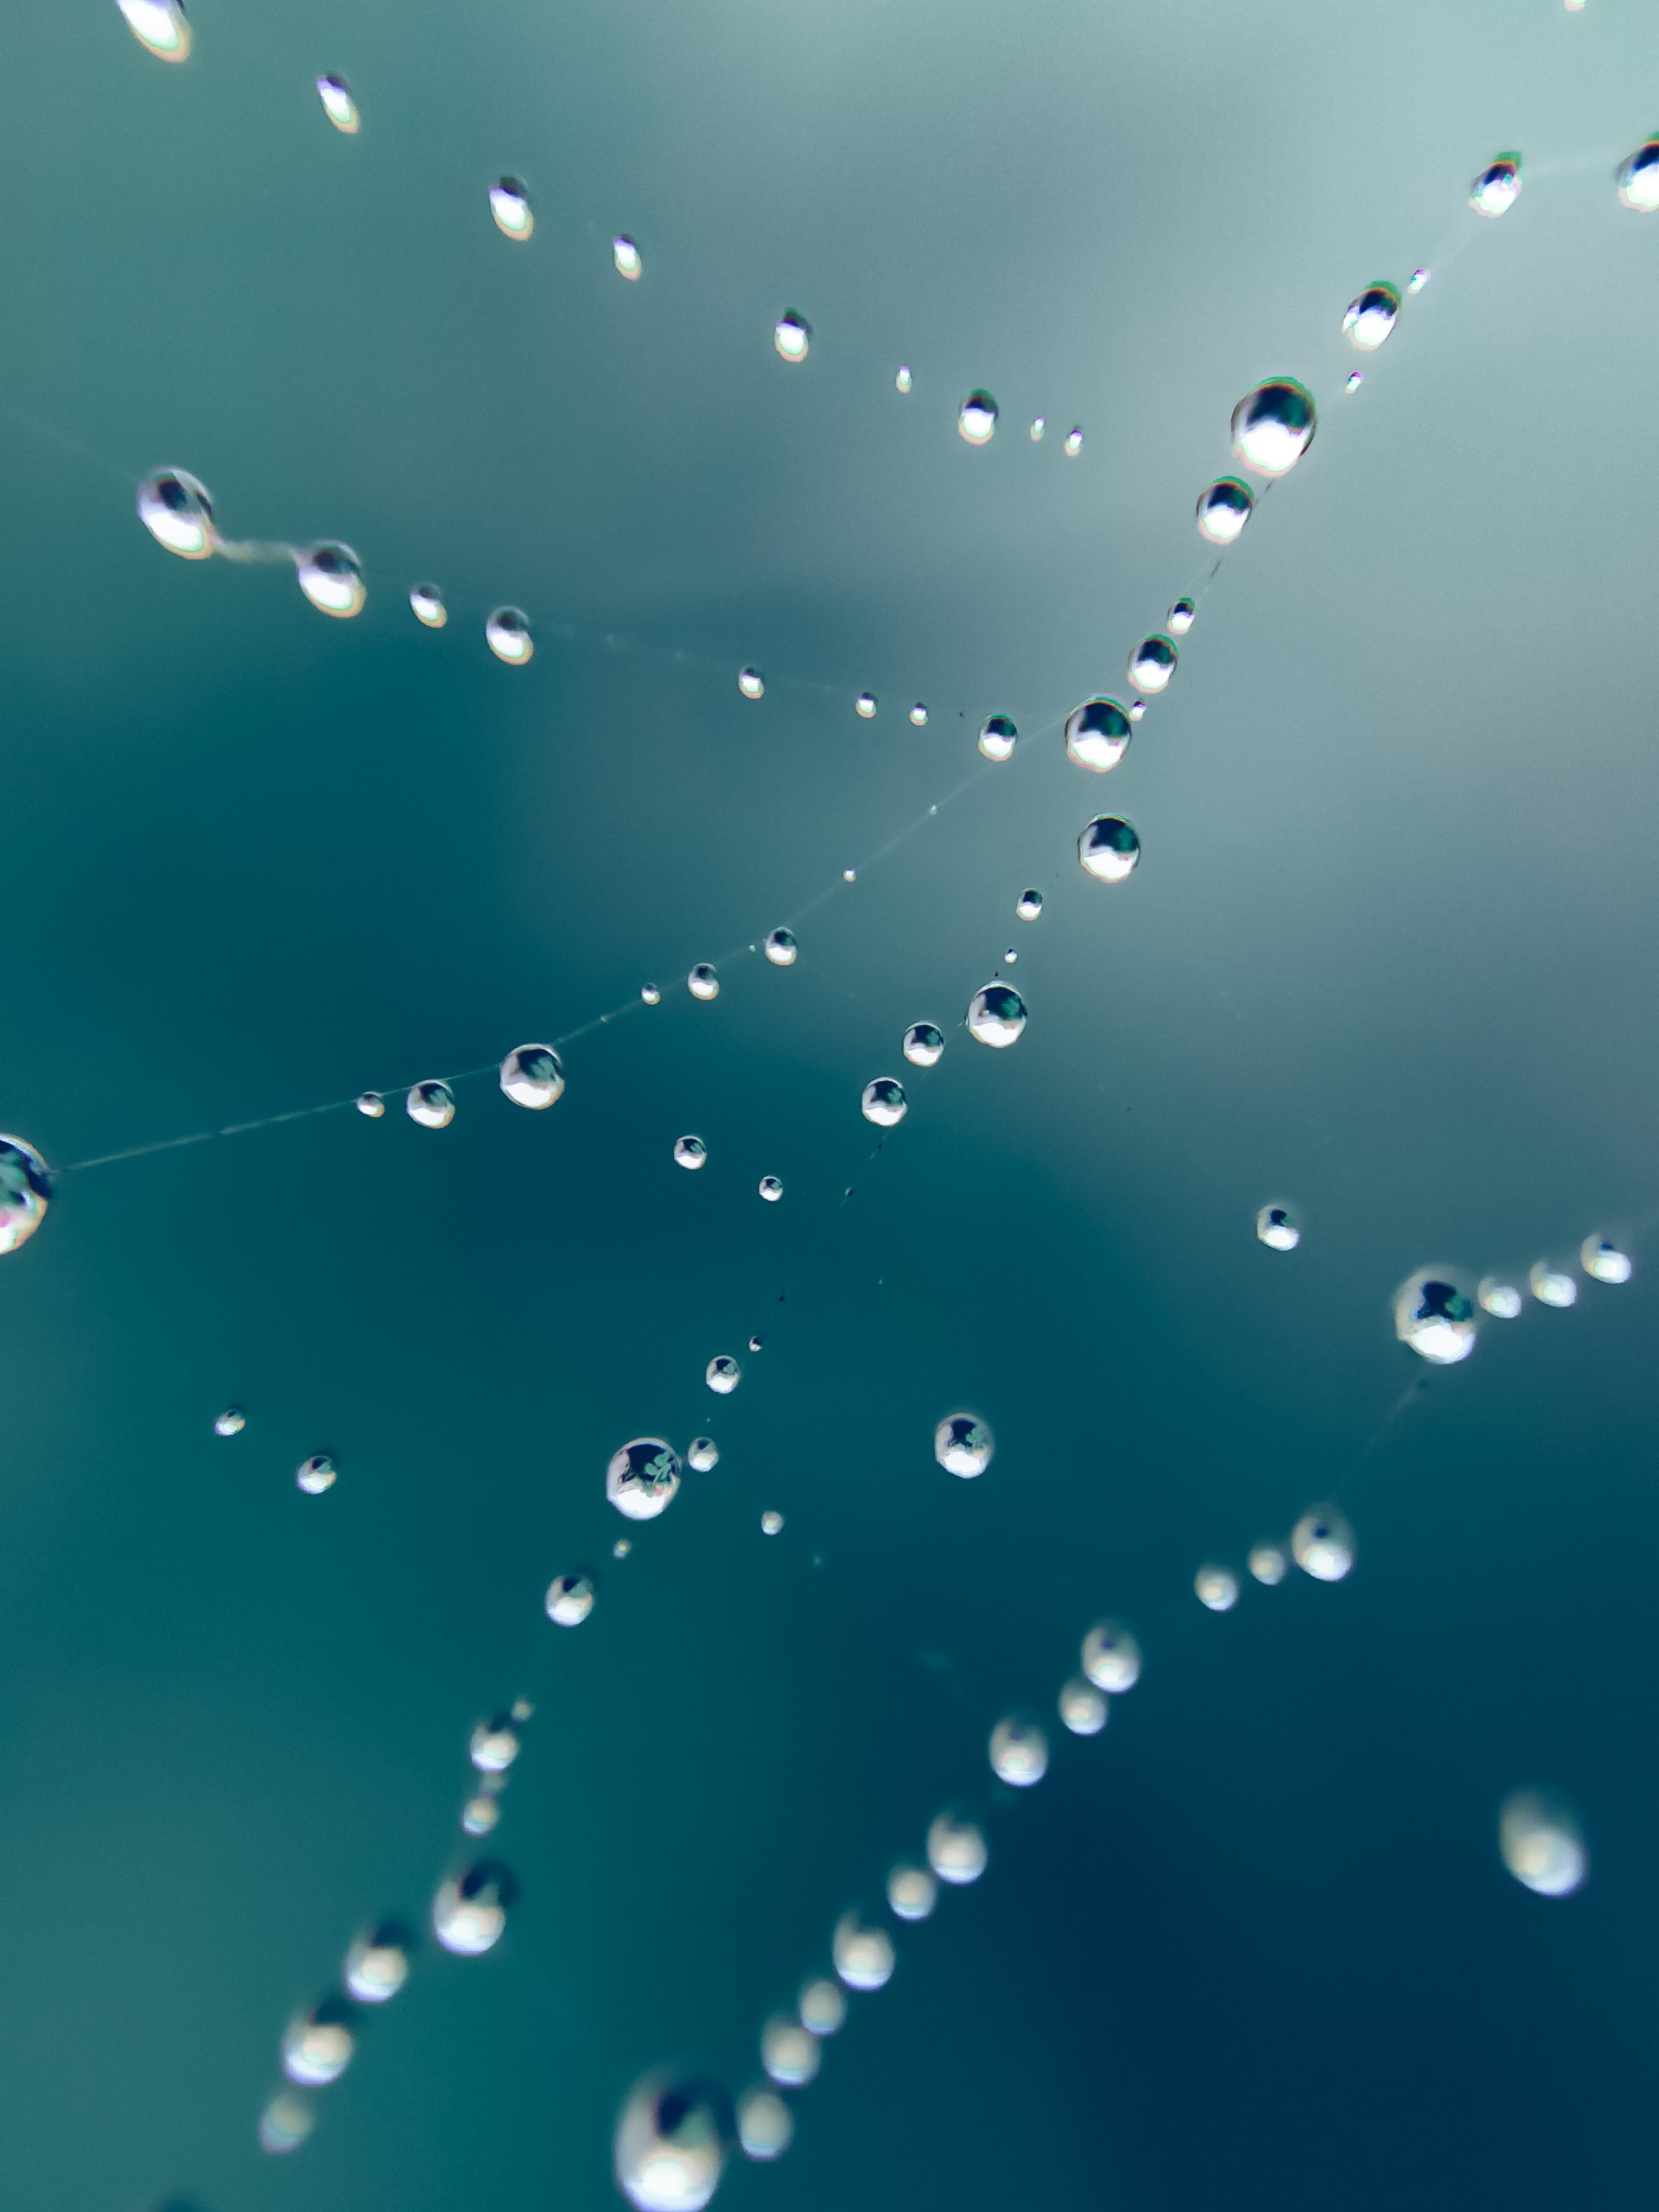 Droplets on spider web